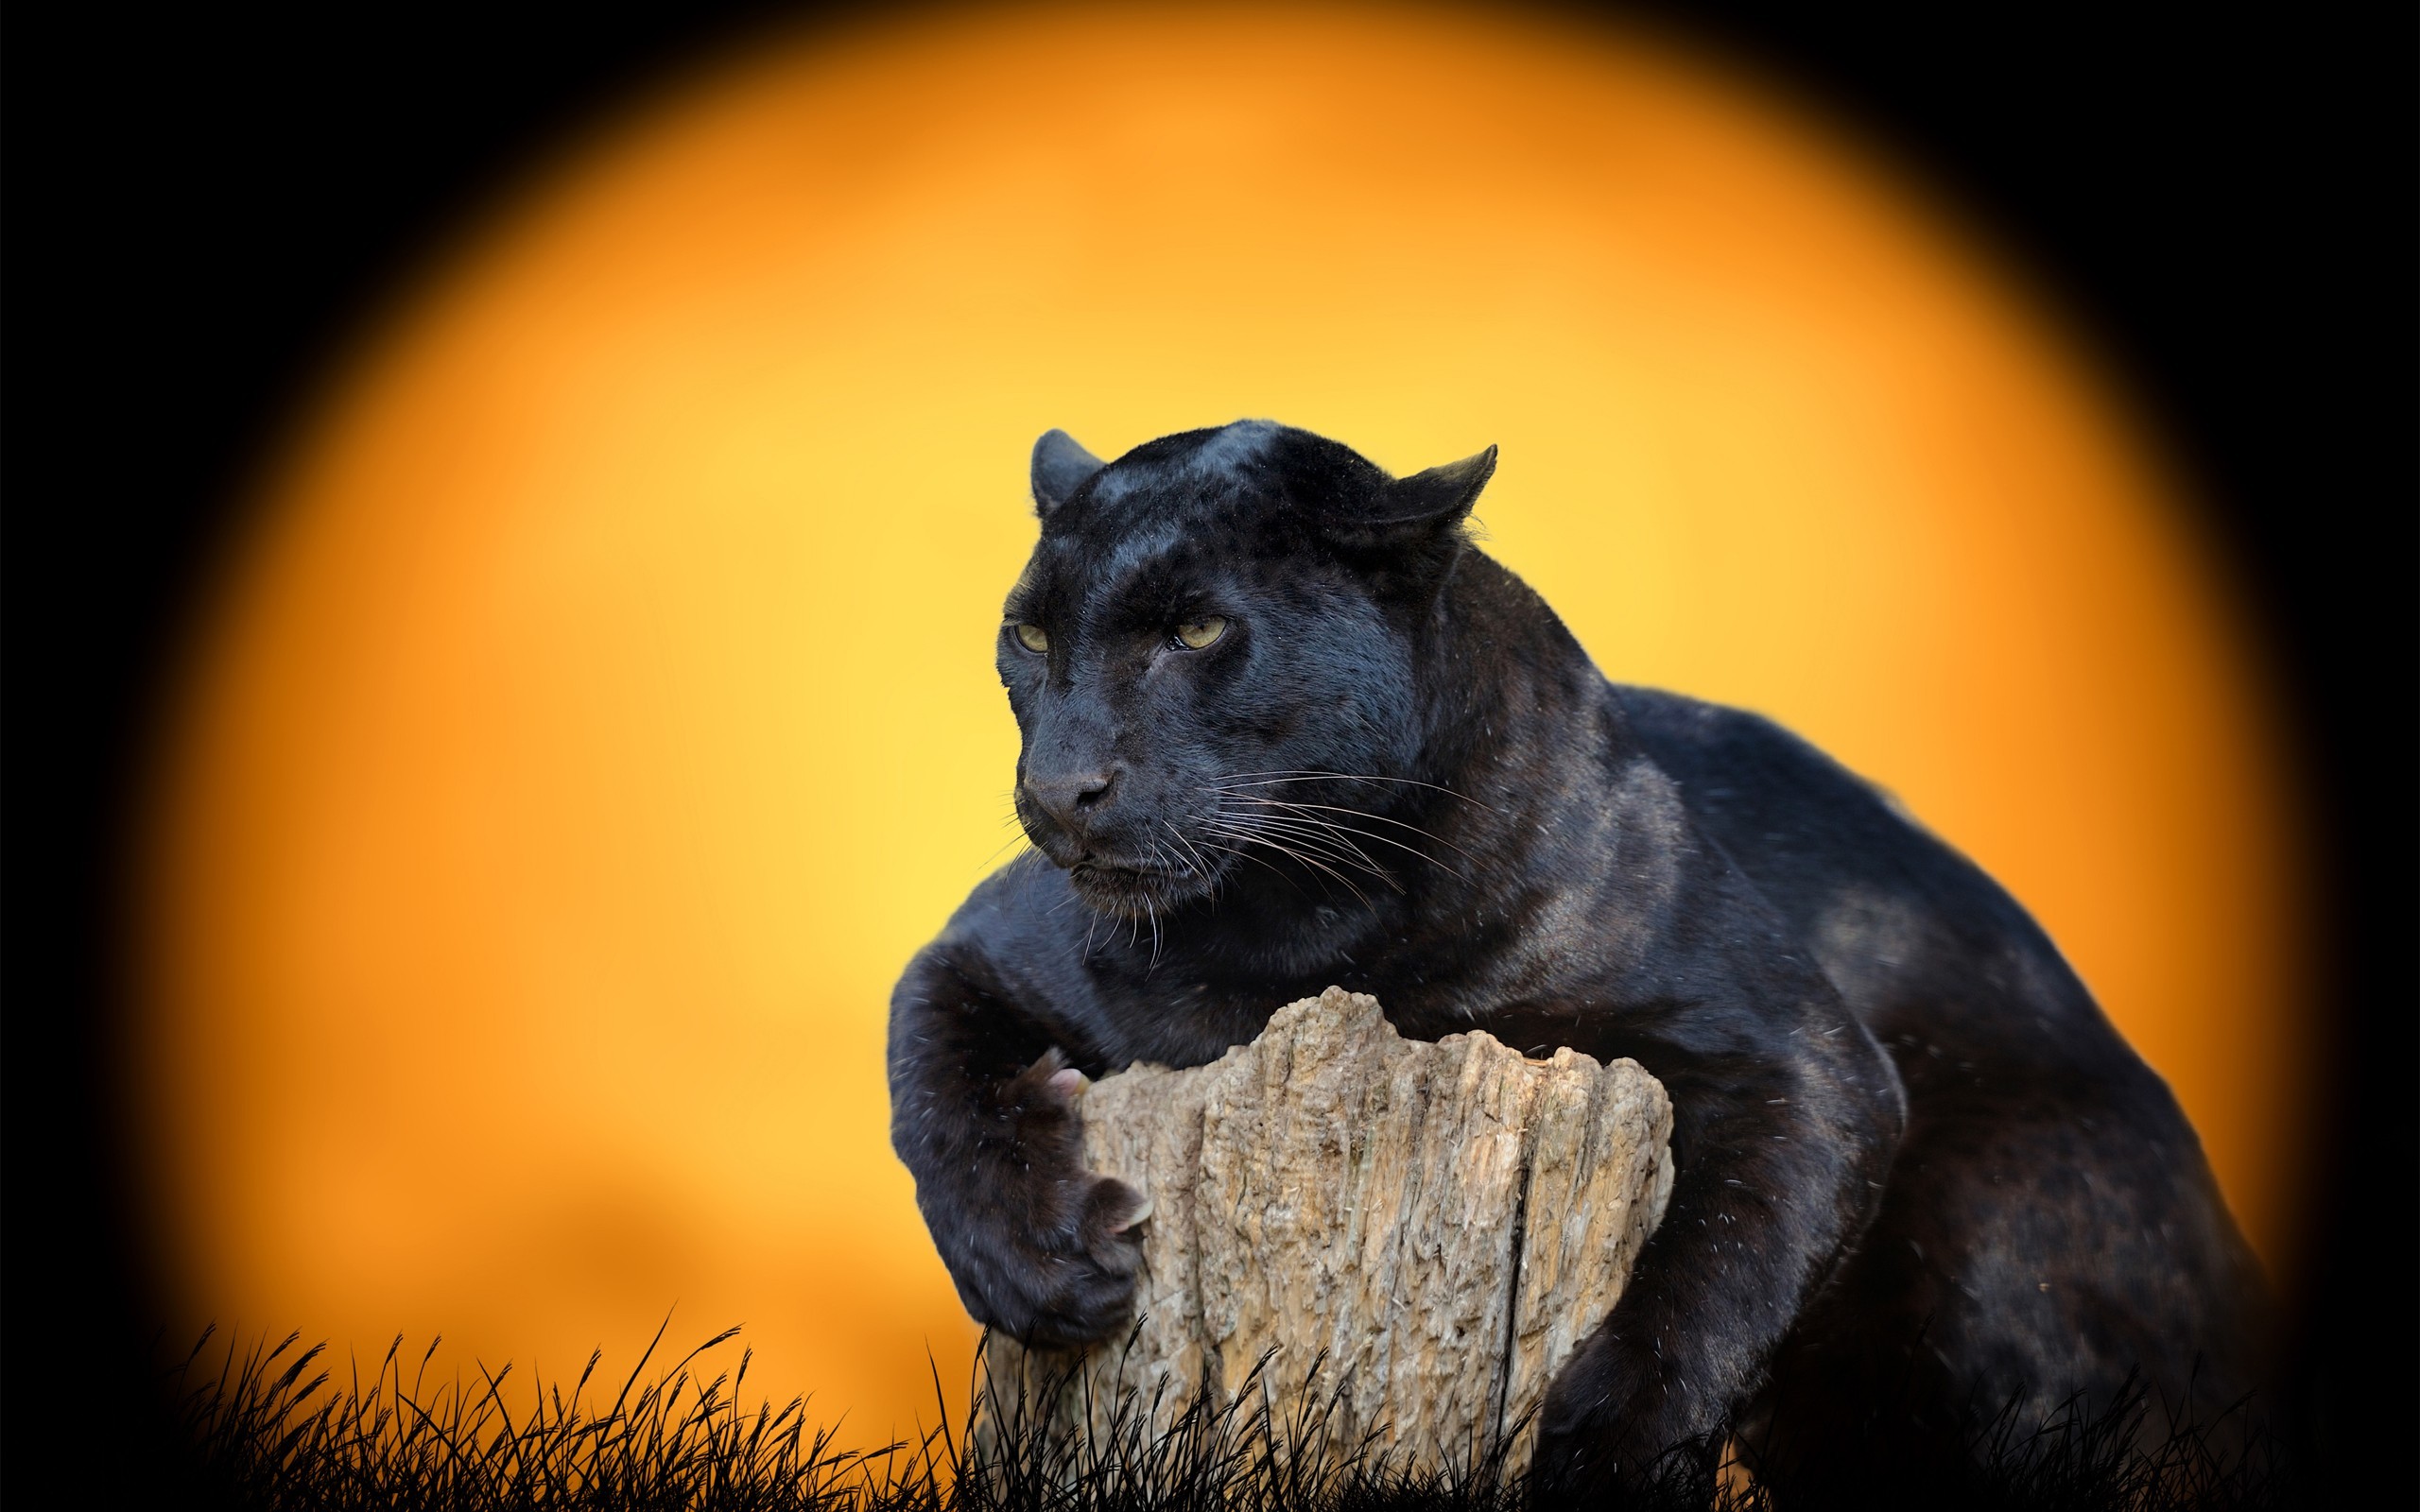 Black Panther Predator IPhone Wallpaper  IPhone Wallpapers  iPhone  Wallpapers  Black jaguar animal Jaguar animal Wild animal wallpaper